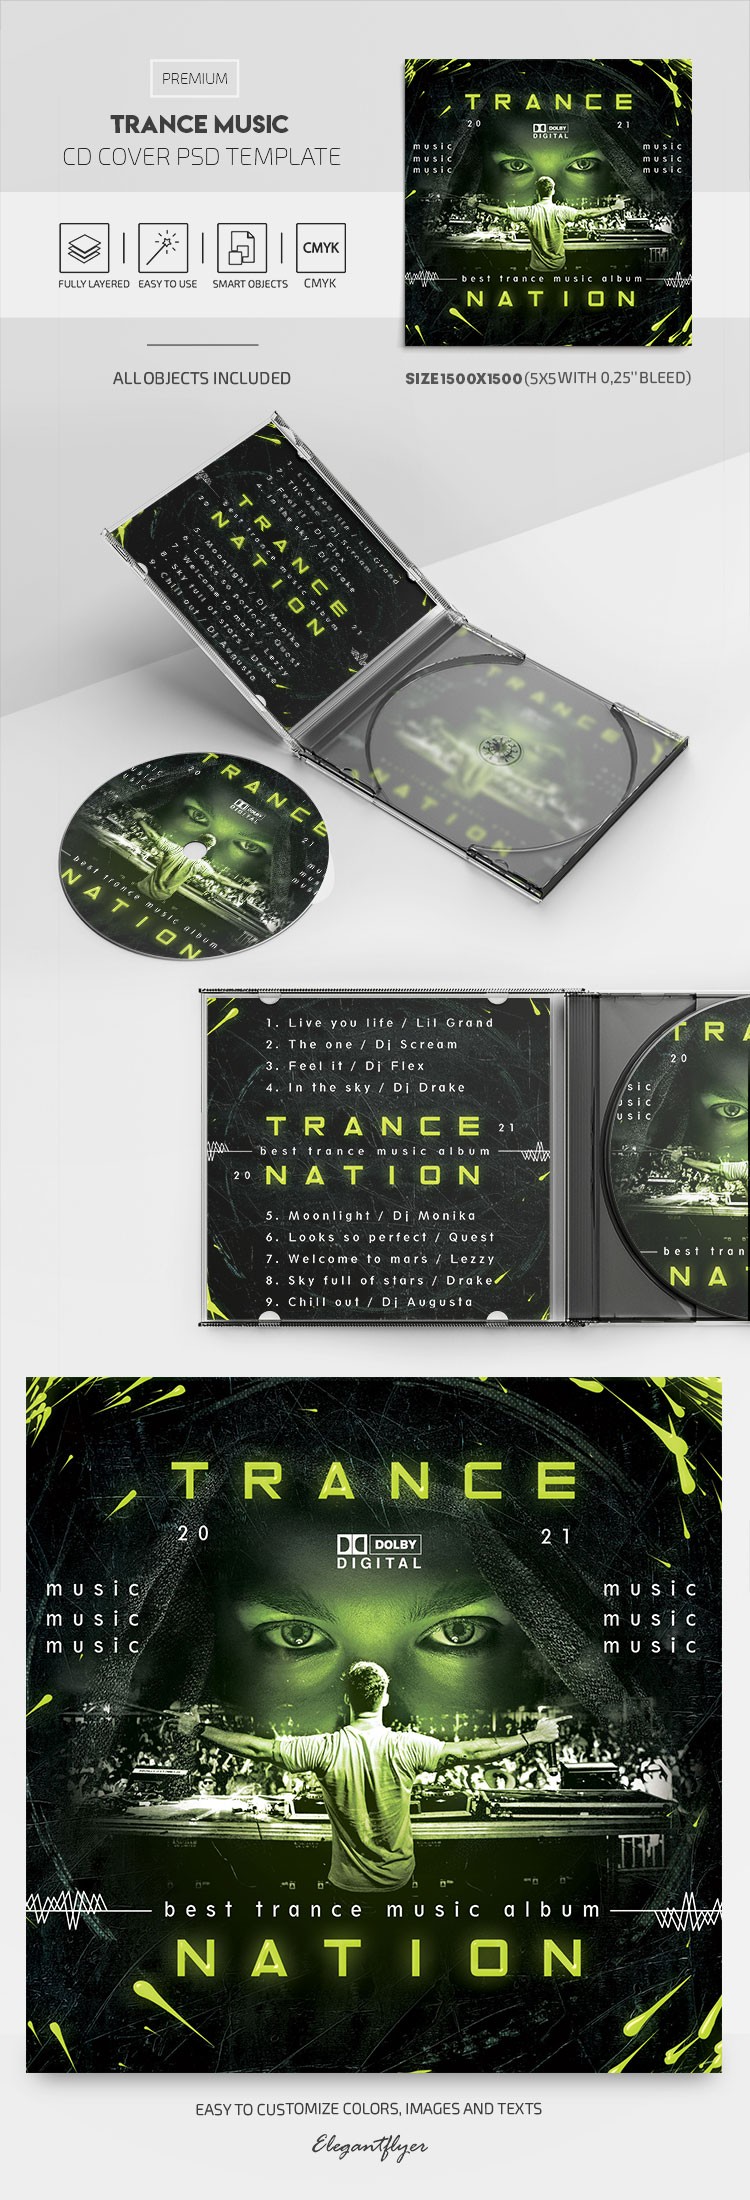 Trance Nation CD Cover by ElegantFlyer